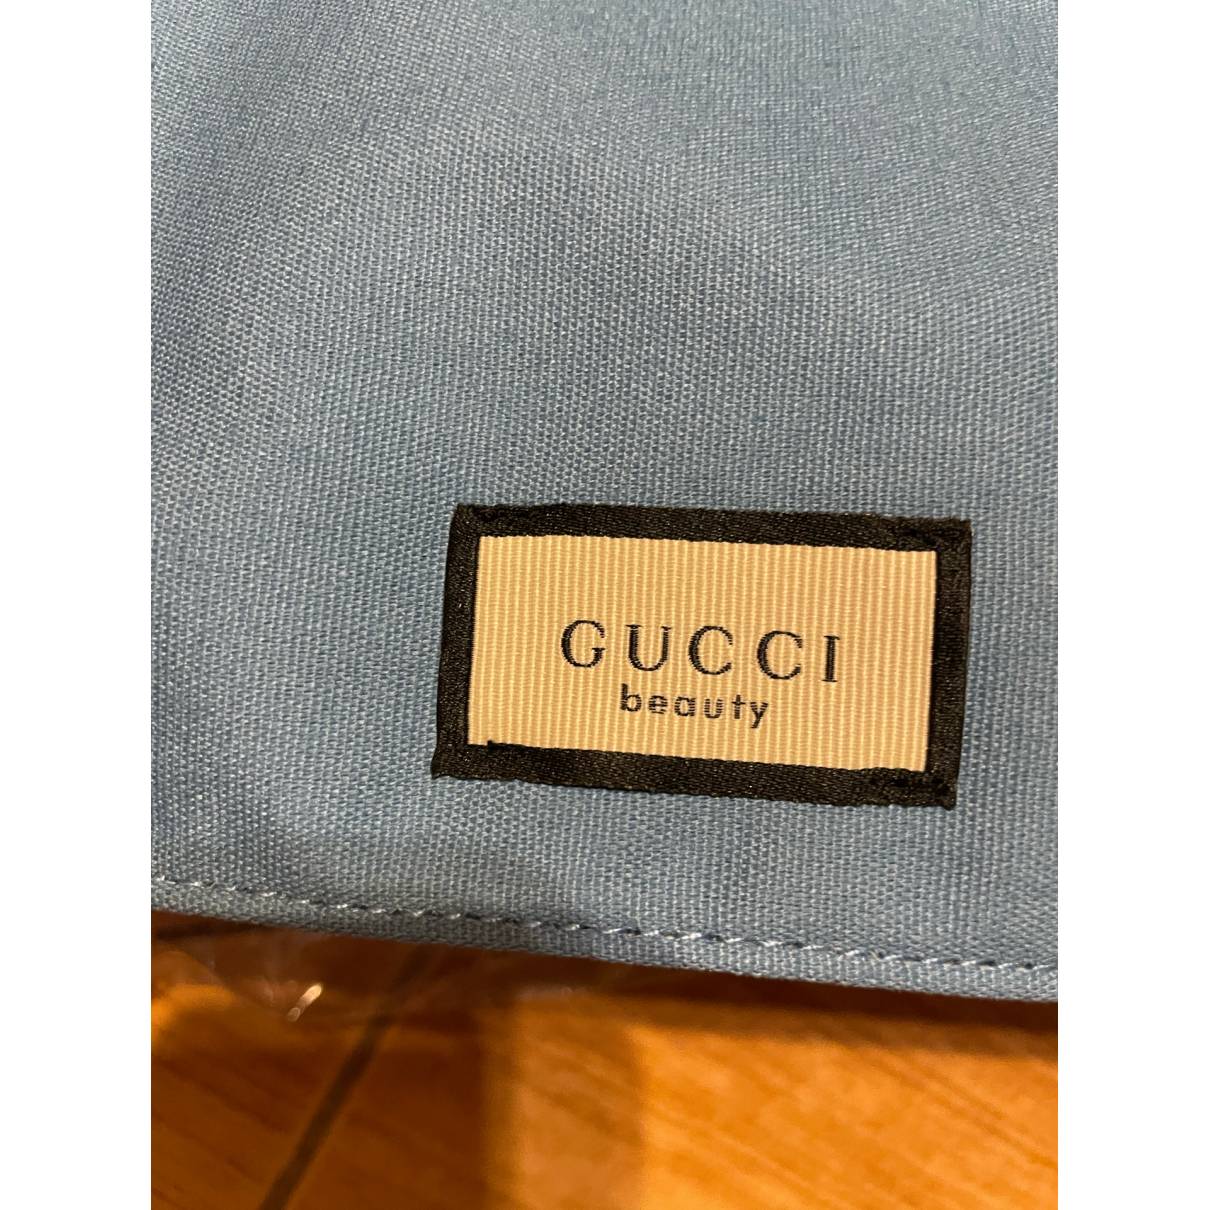 Buy Gucci Travel bag online